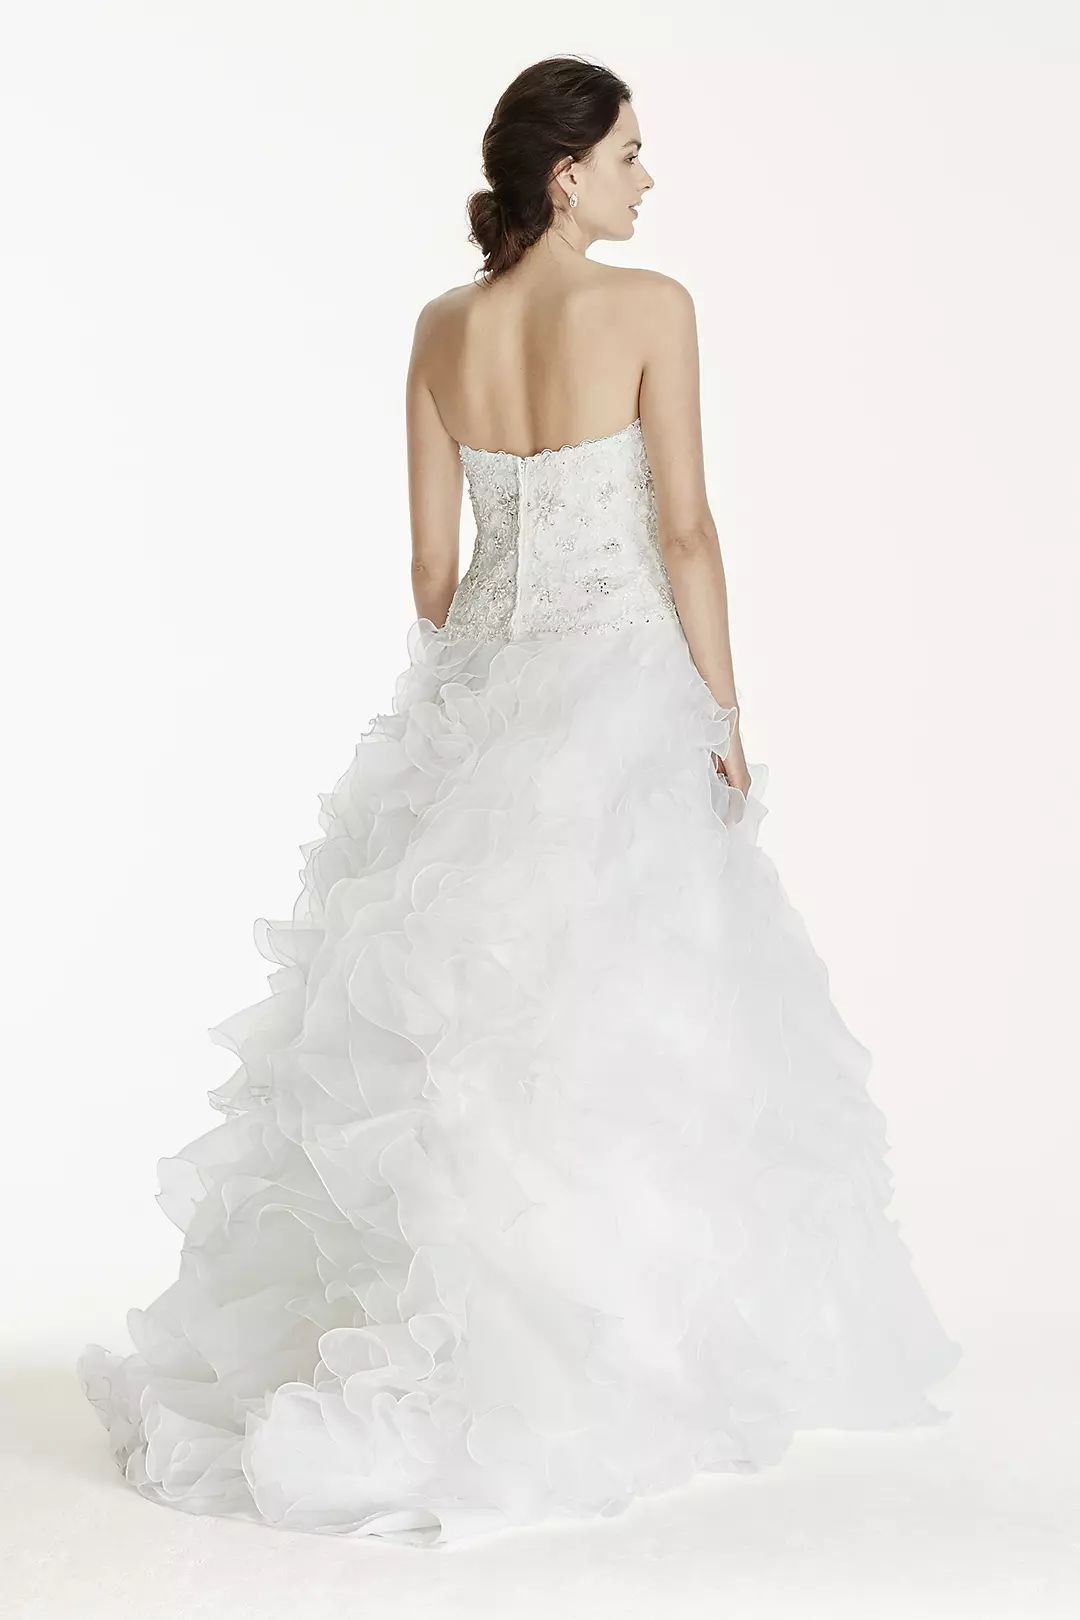 Jewel Organza Wedding Dress with Ruffled Skirt Image 2